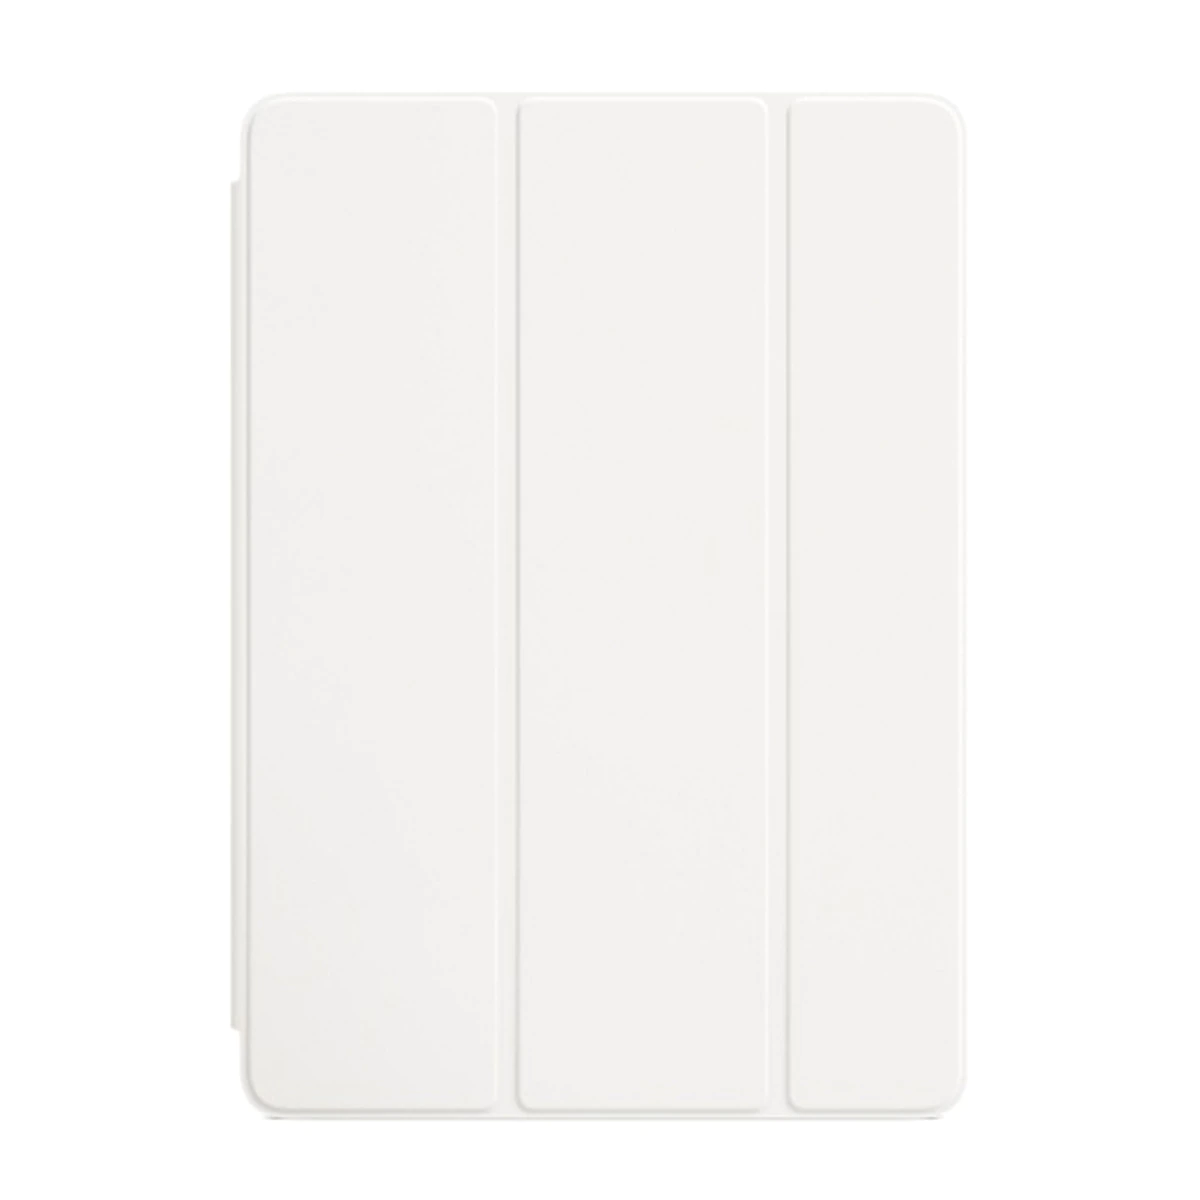 Funda Apple Smart Cover para iPad y iPad Air 2 blanca